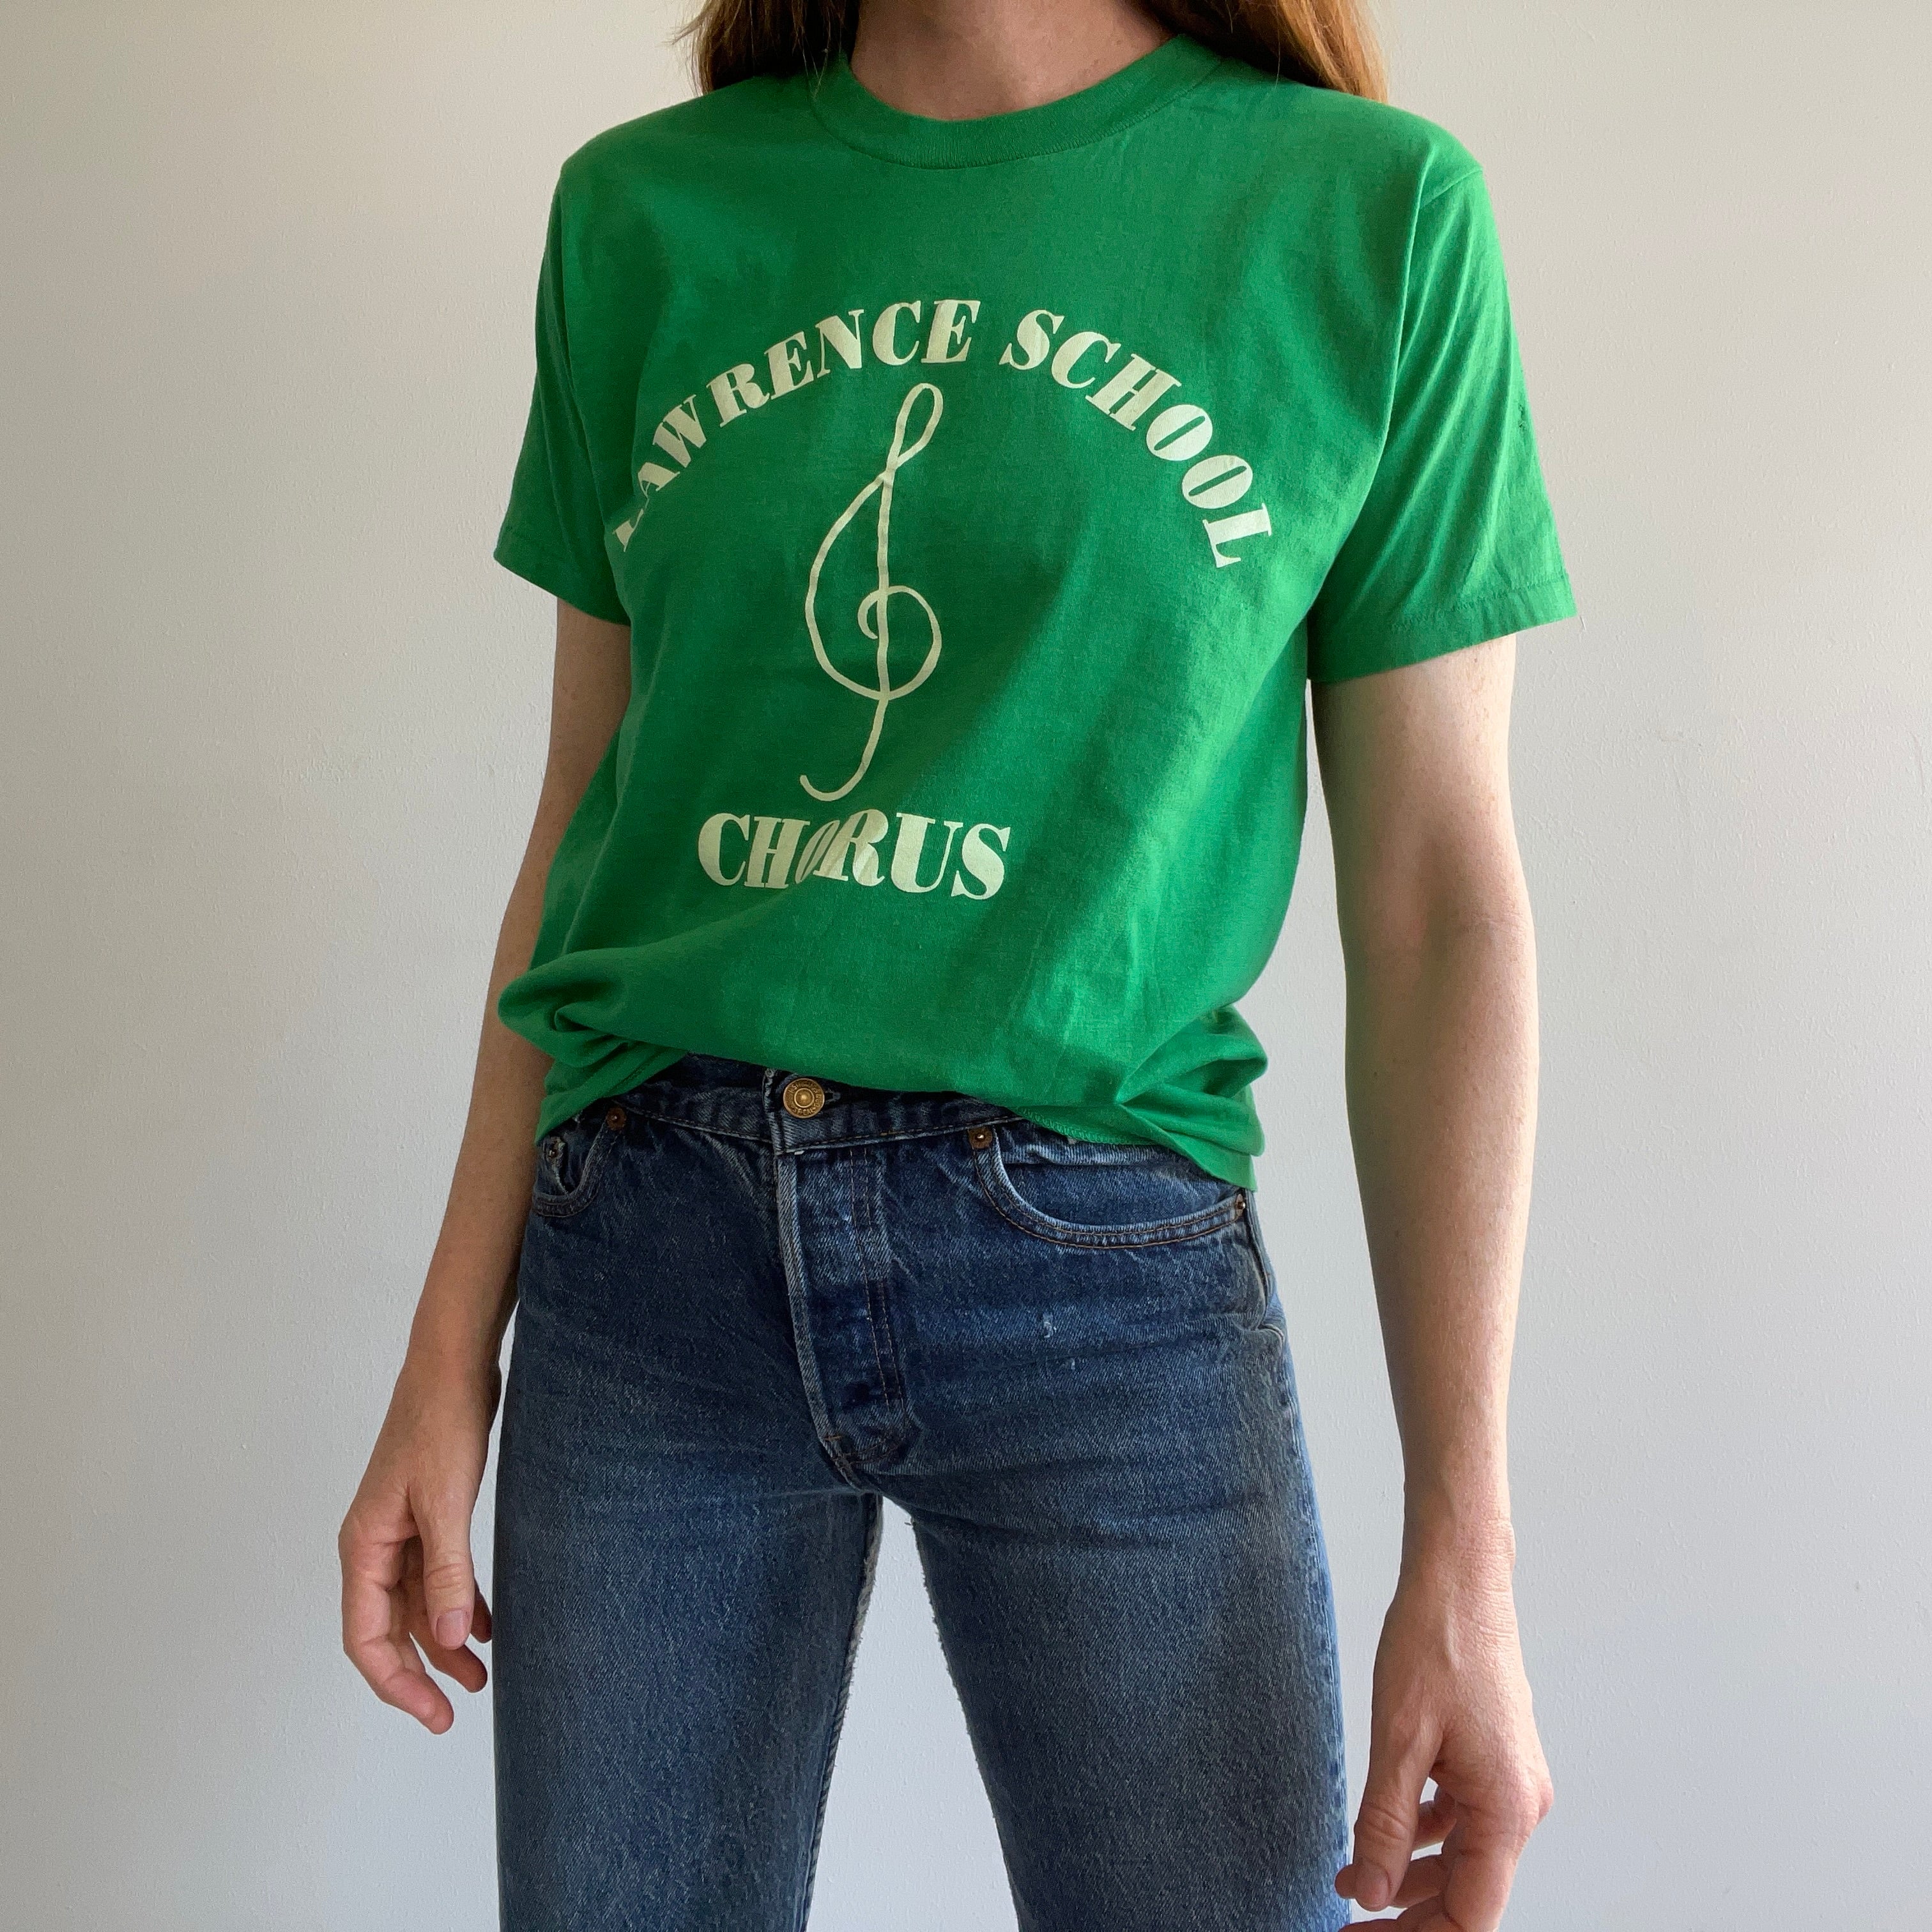 1980s Lawrence School Chorus by Screen Stars T-Shirt